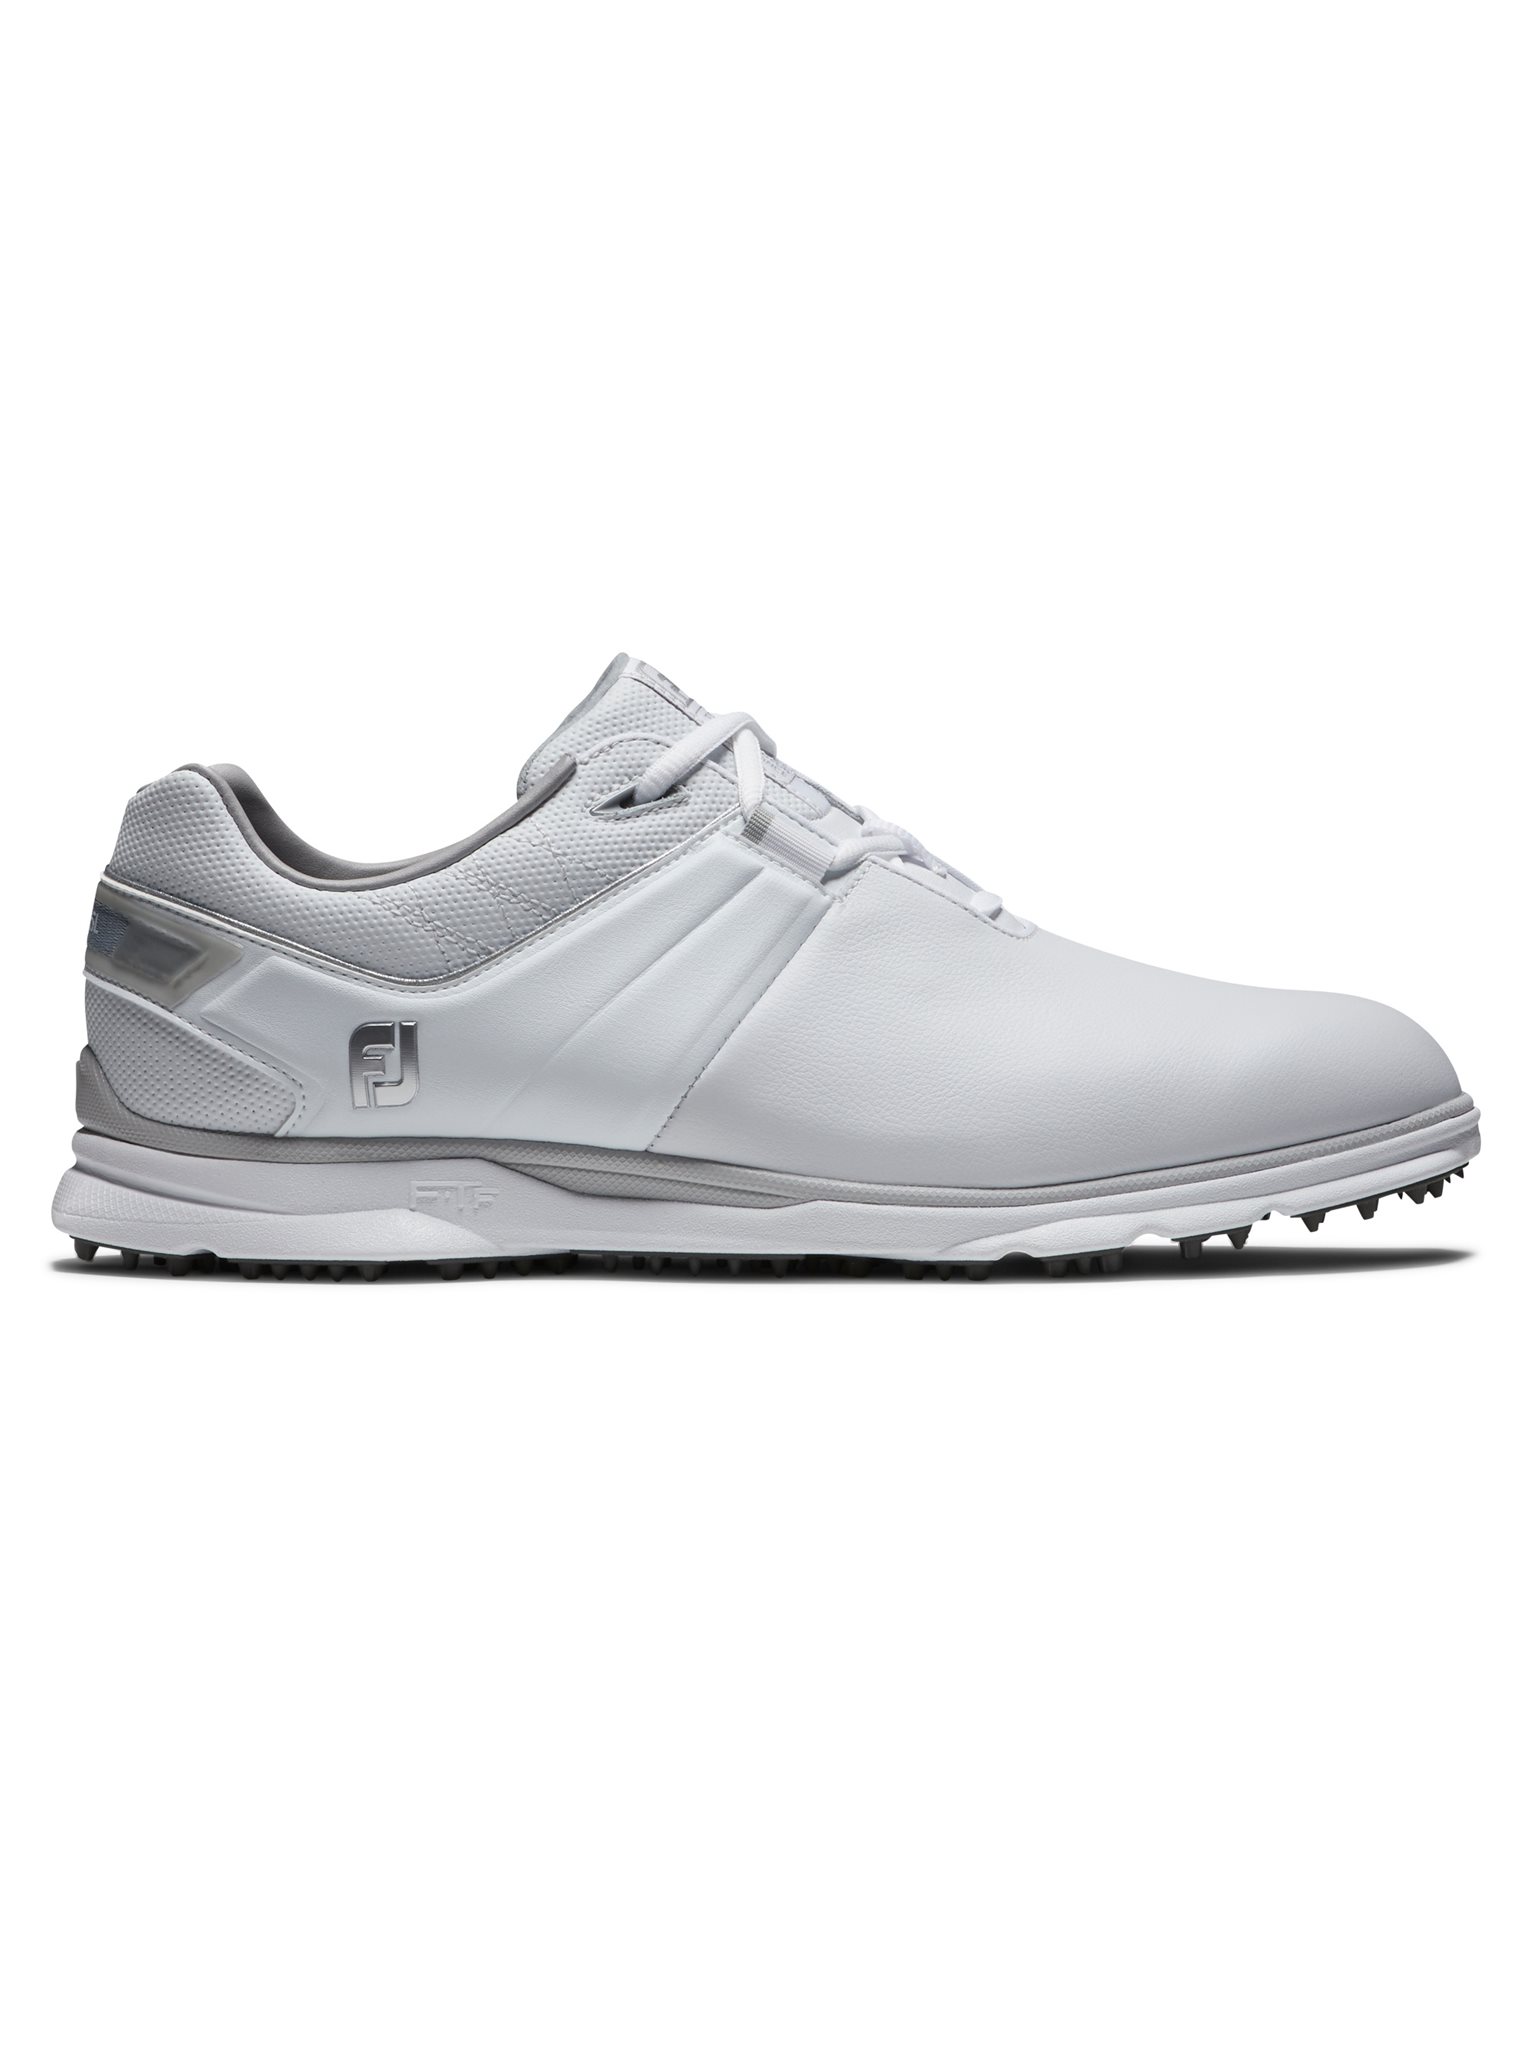 FootJoy heren golfschoenen Pro/SL wit-grijs - Golftassen, Golfclubs, Golfschoenen | Ook online kopen bij Point | Golfers Point